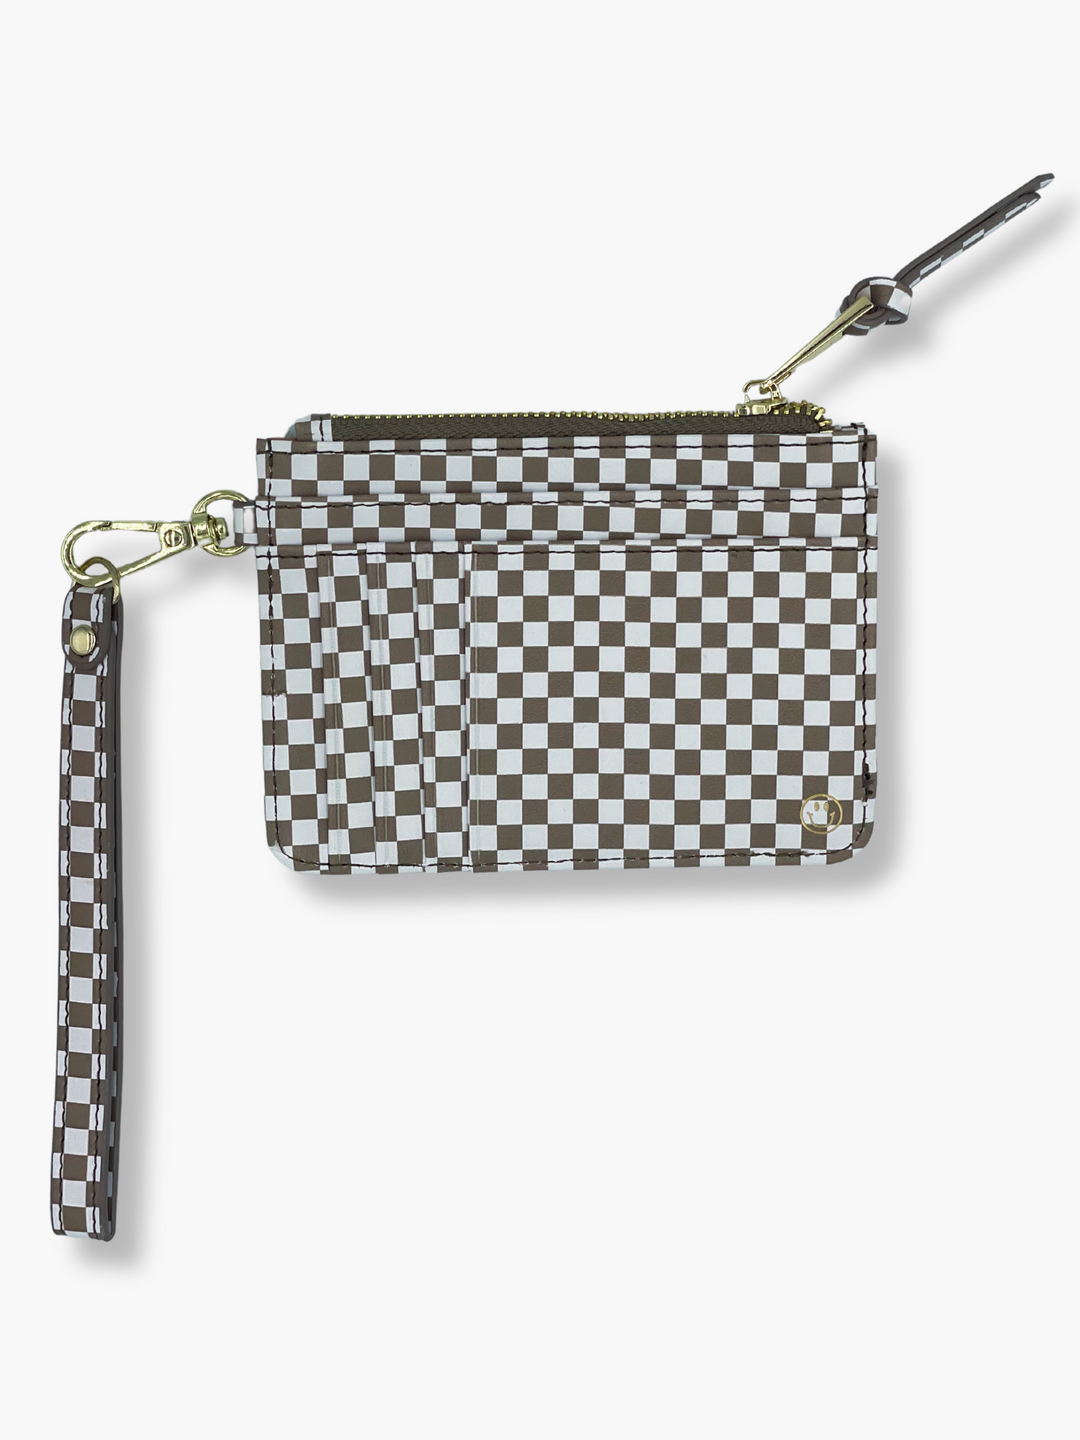 Tan Checkered Snap/Wrist Wallet